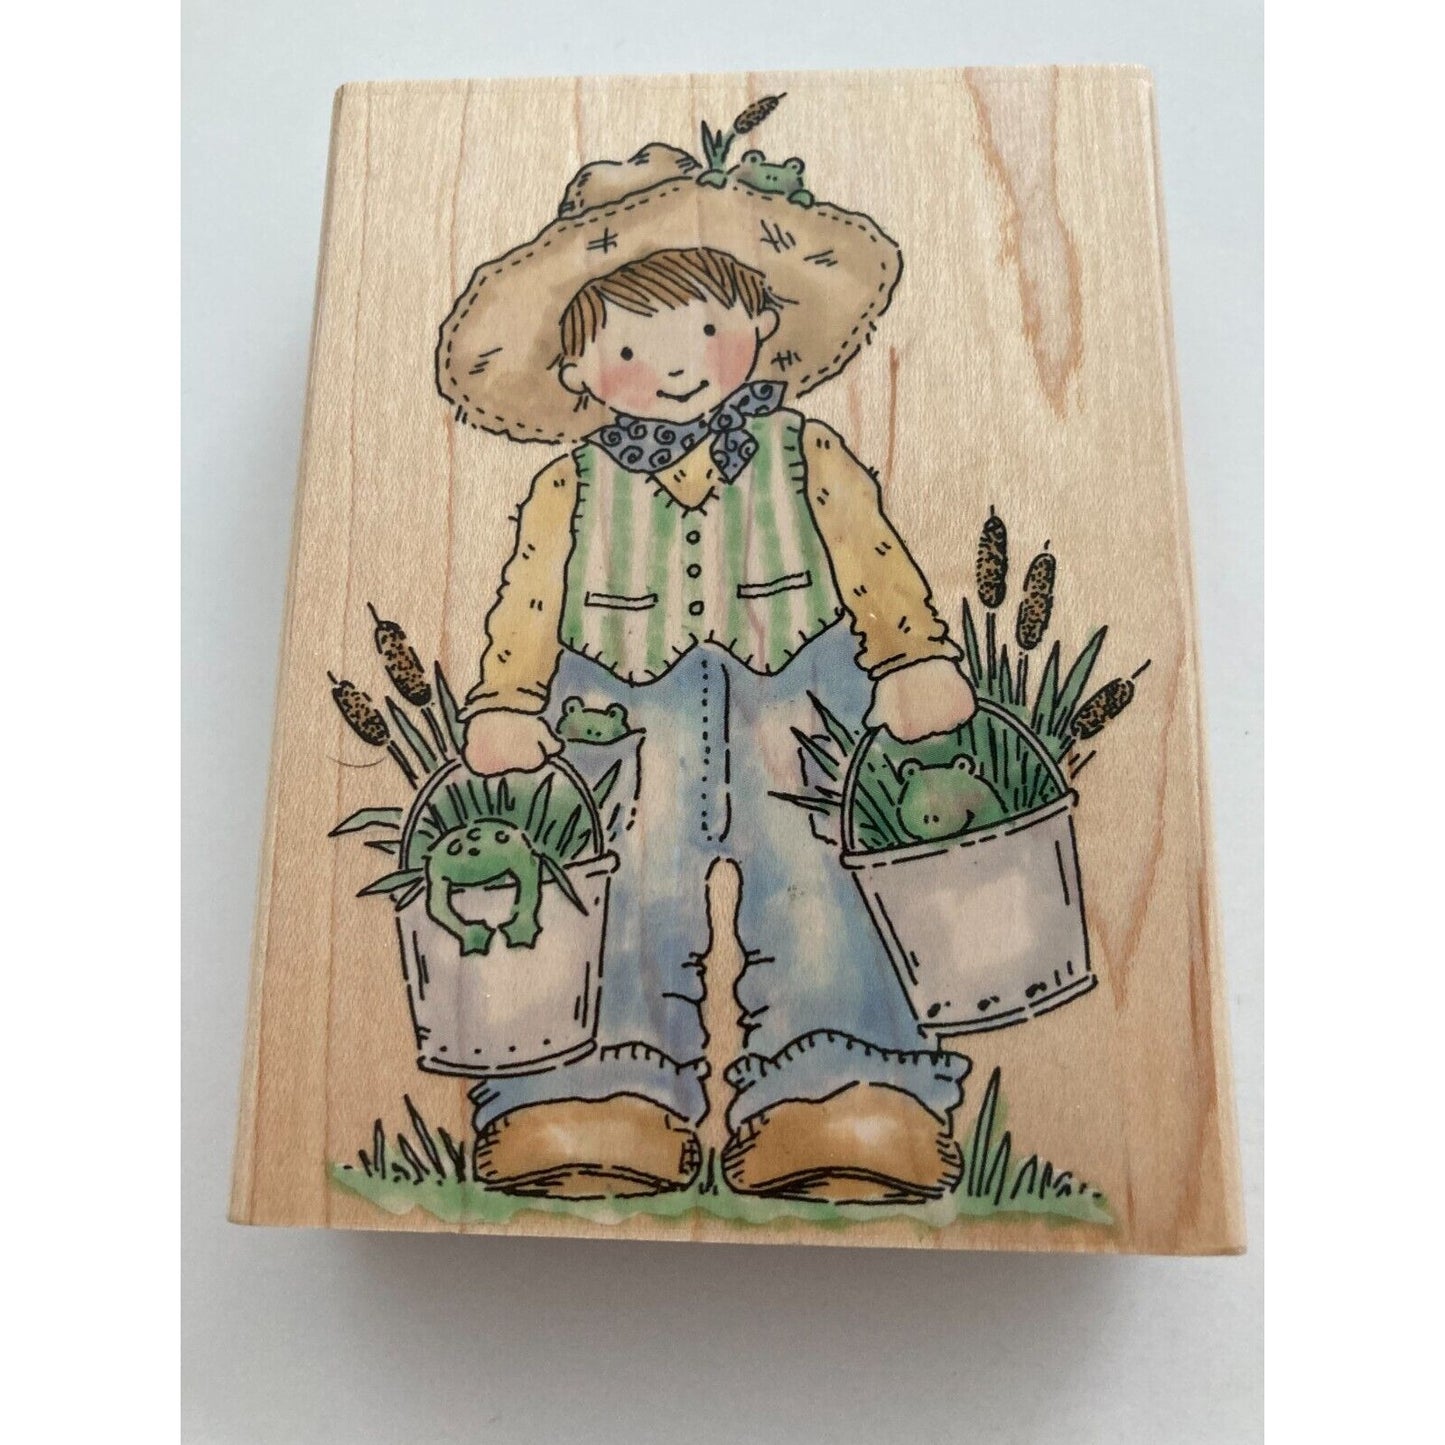 Penny Black Rubber Stamp Frog Farming Boy Cowboy Hat Country Farmer Card Making